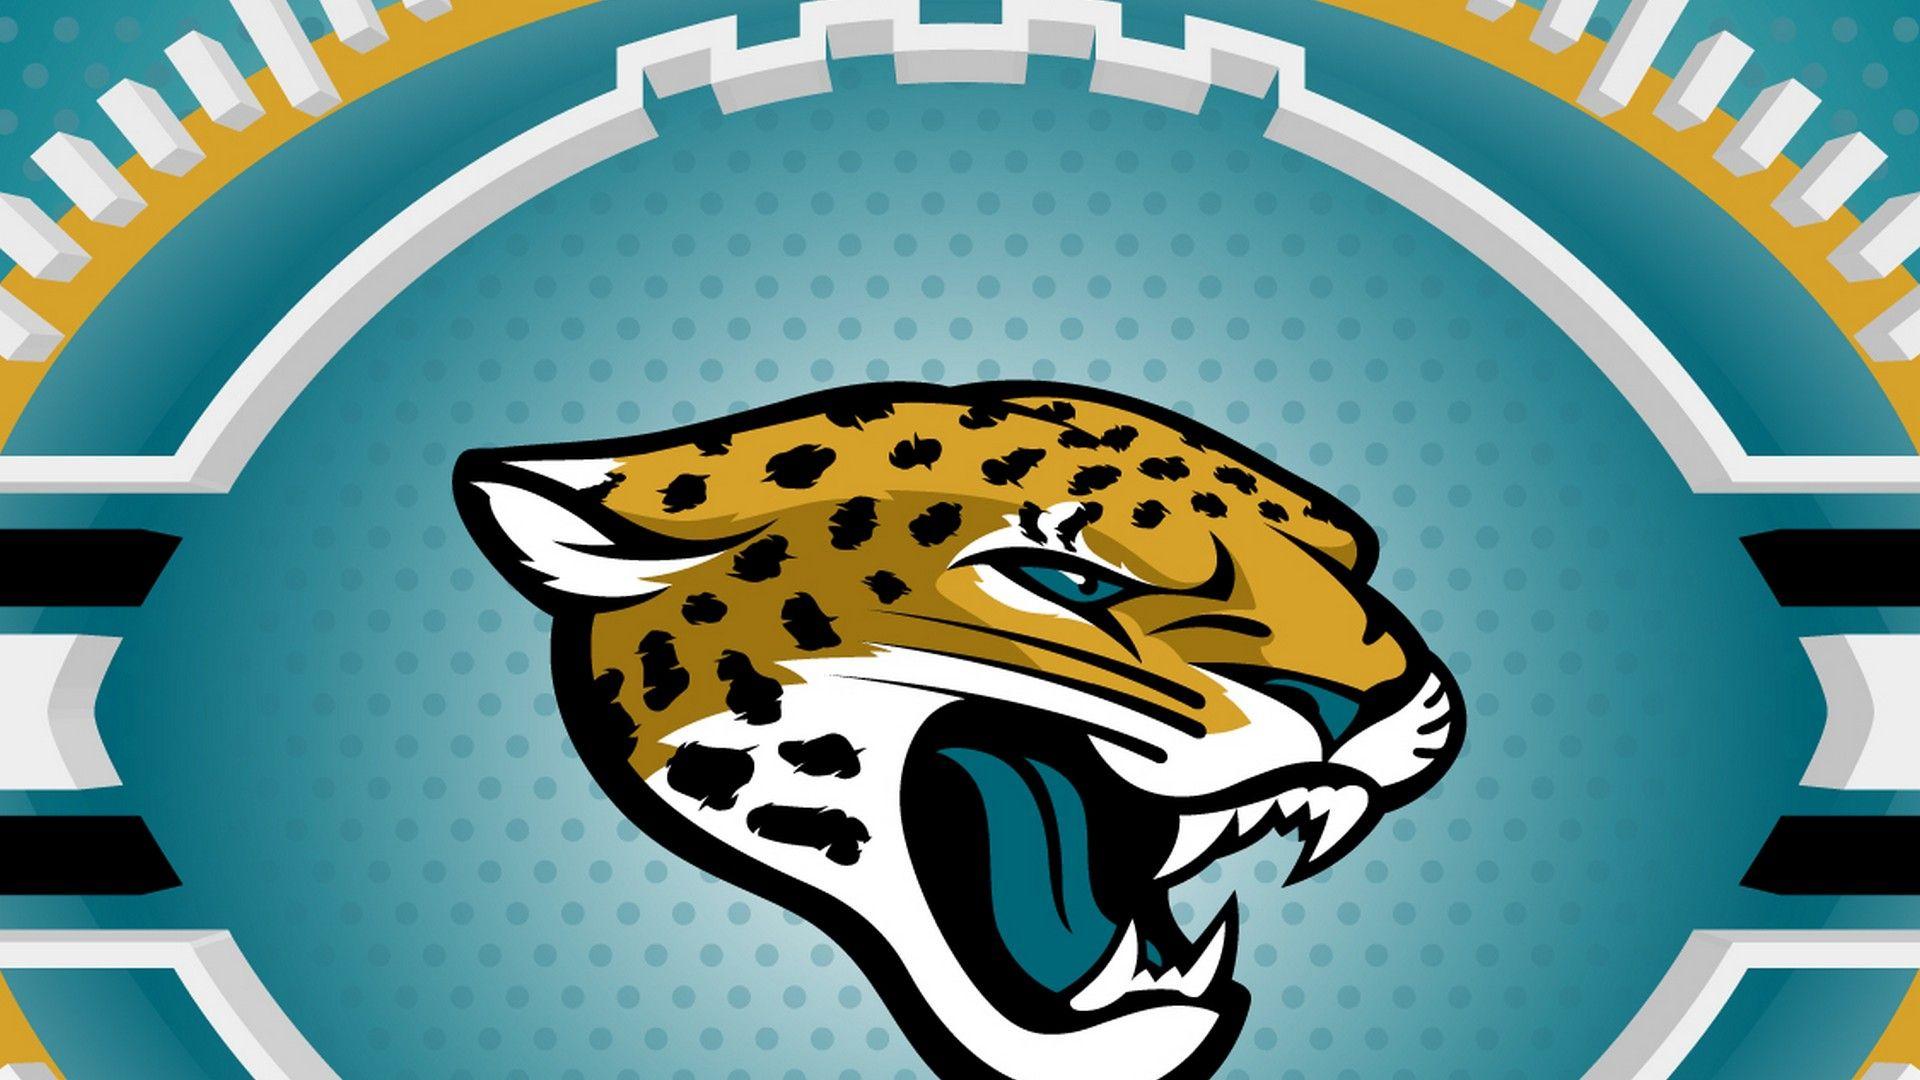 2023 Jacksonville Jaguars wallpaper  Pro Sports Backgrounds